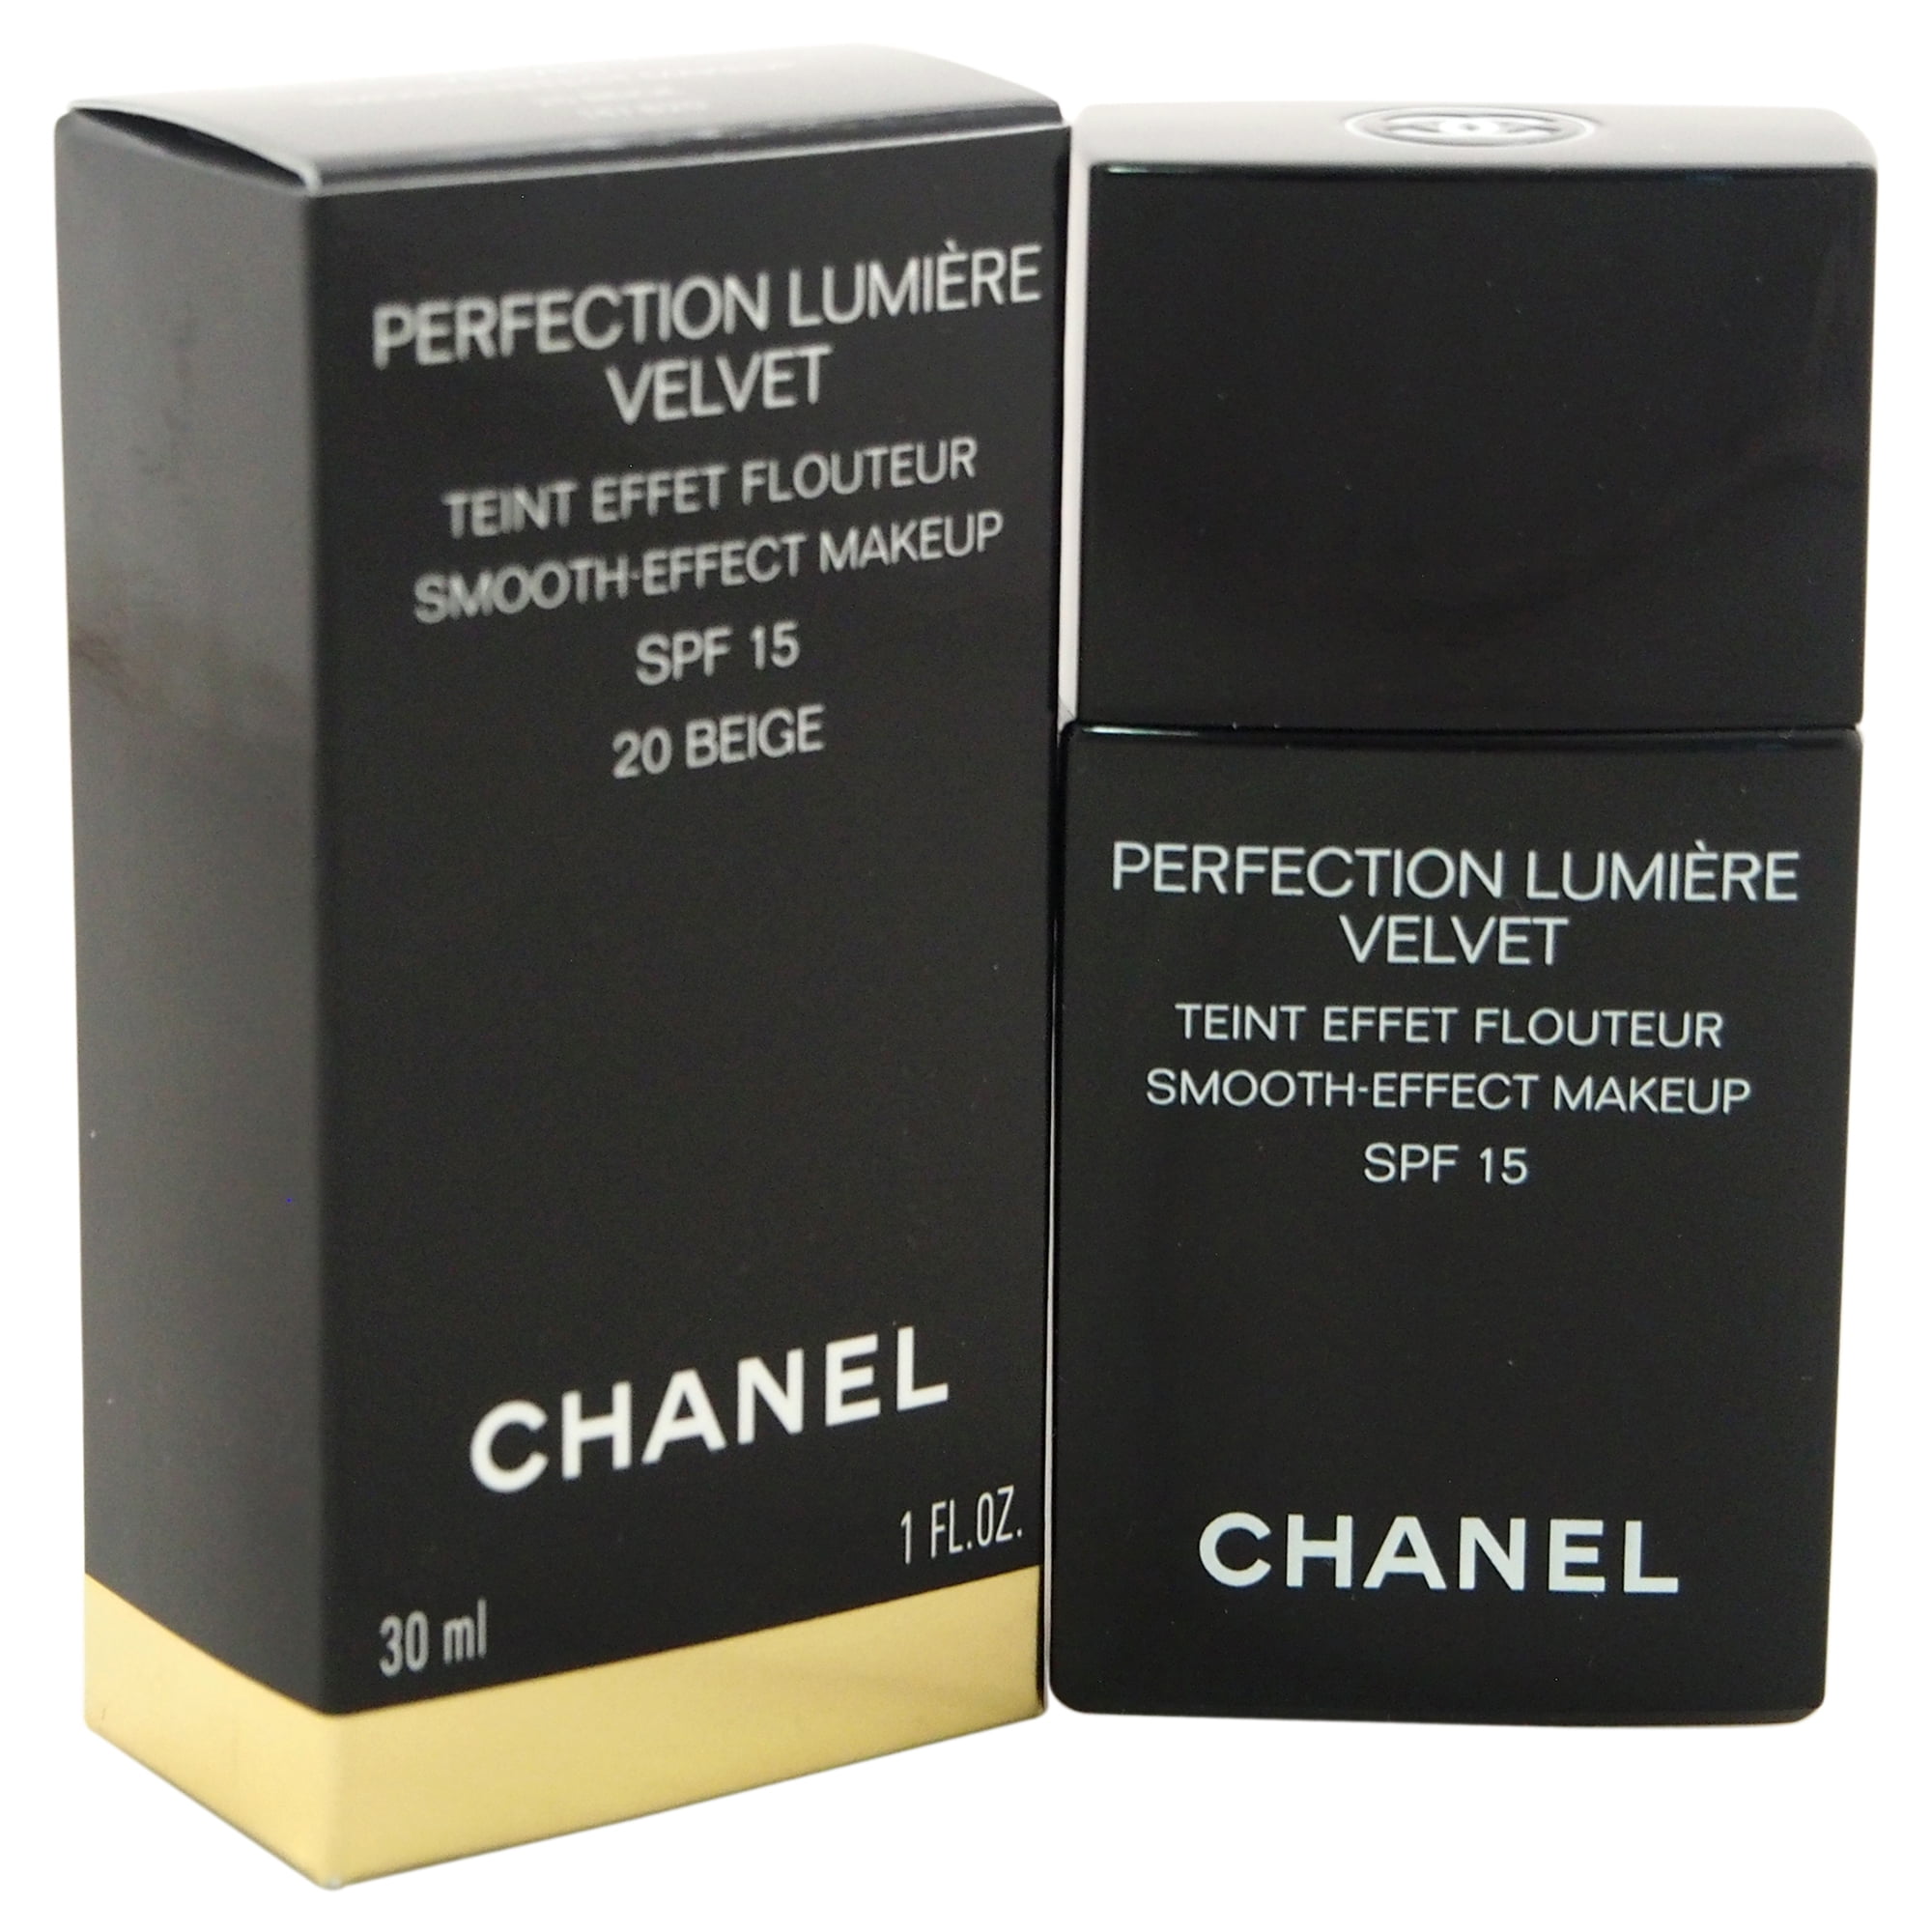 Chanel Perfection Lumiere Velvet Smooth Effect Makeup, SPF 15, Beige 20 - 1 oz bottle